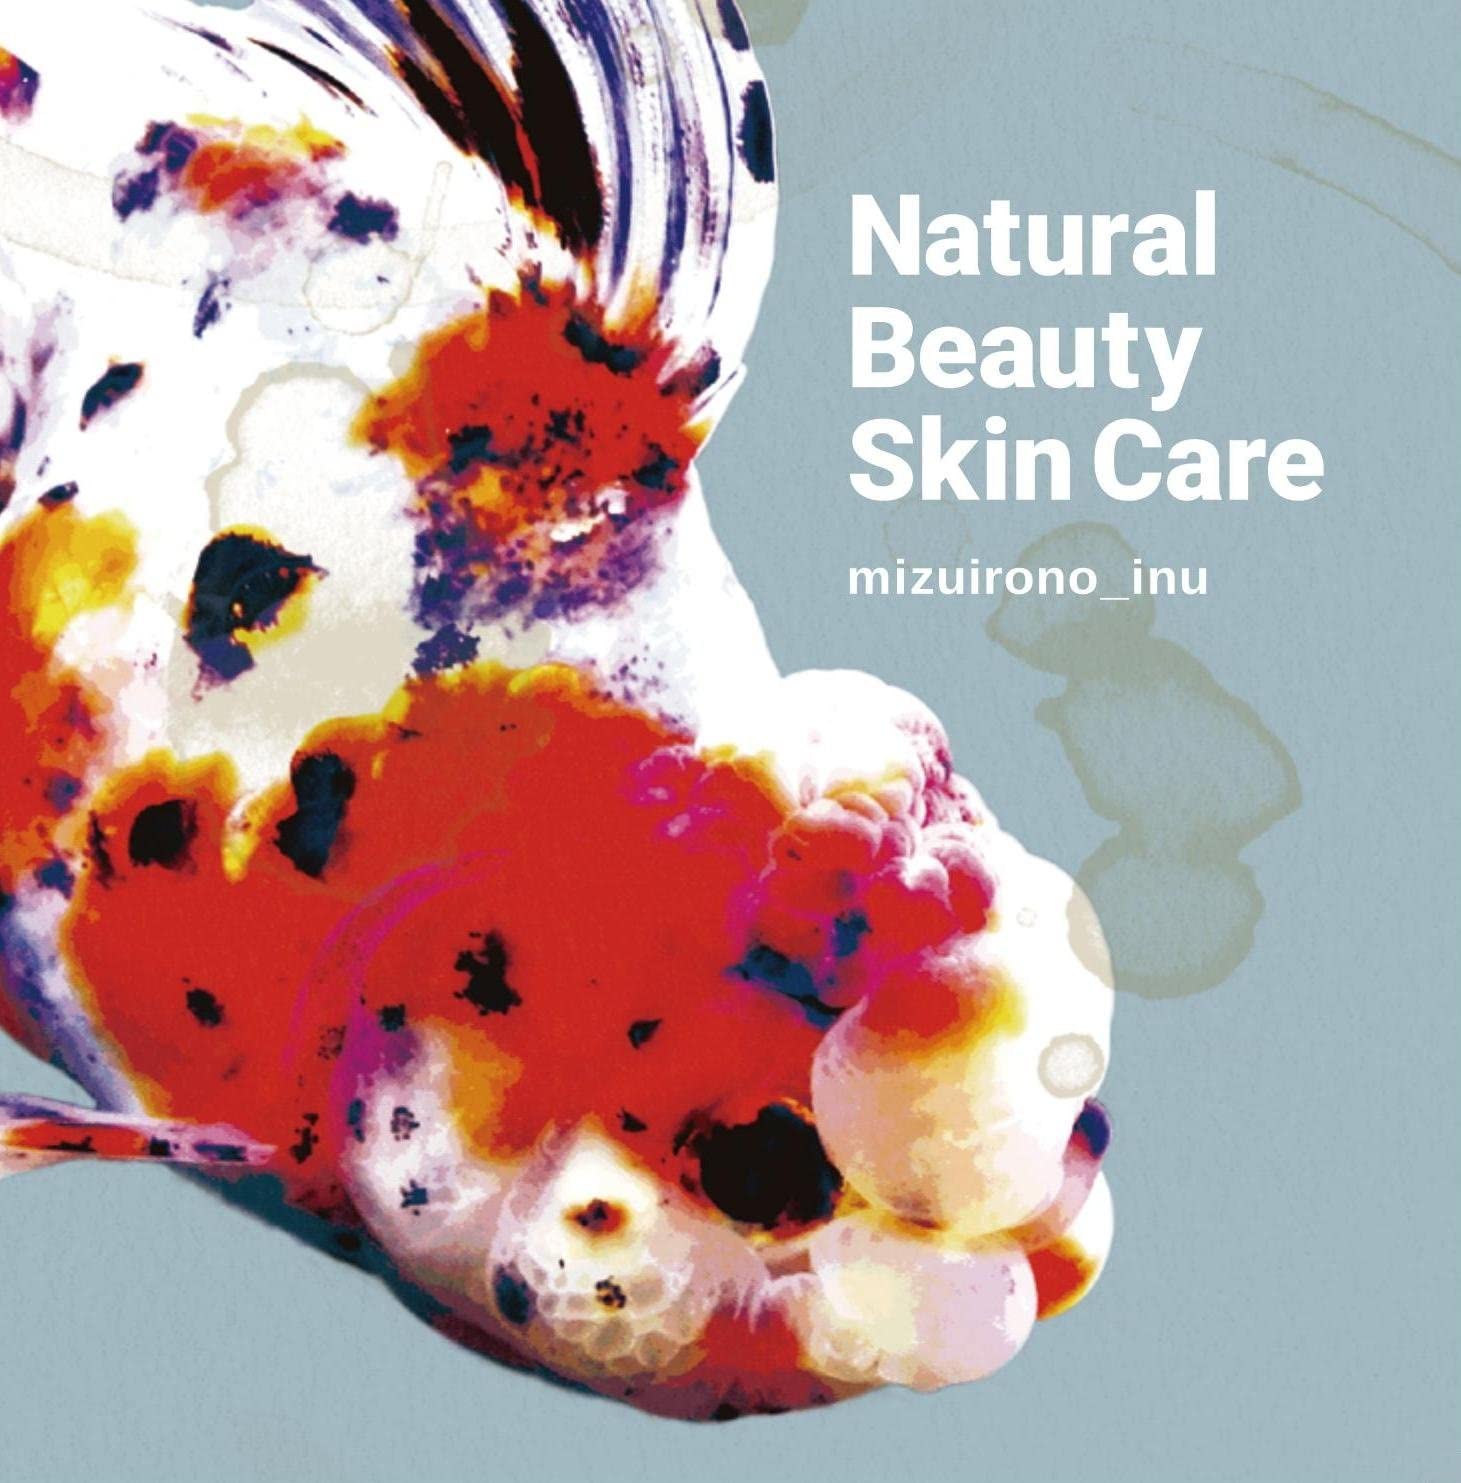 mizuirono_inu「Natural Beauty Skin Care」